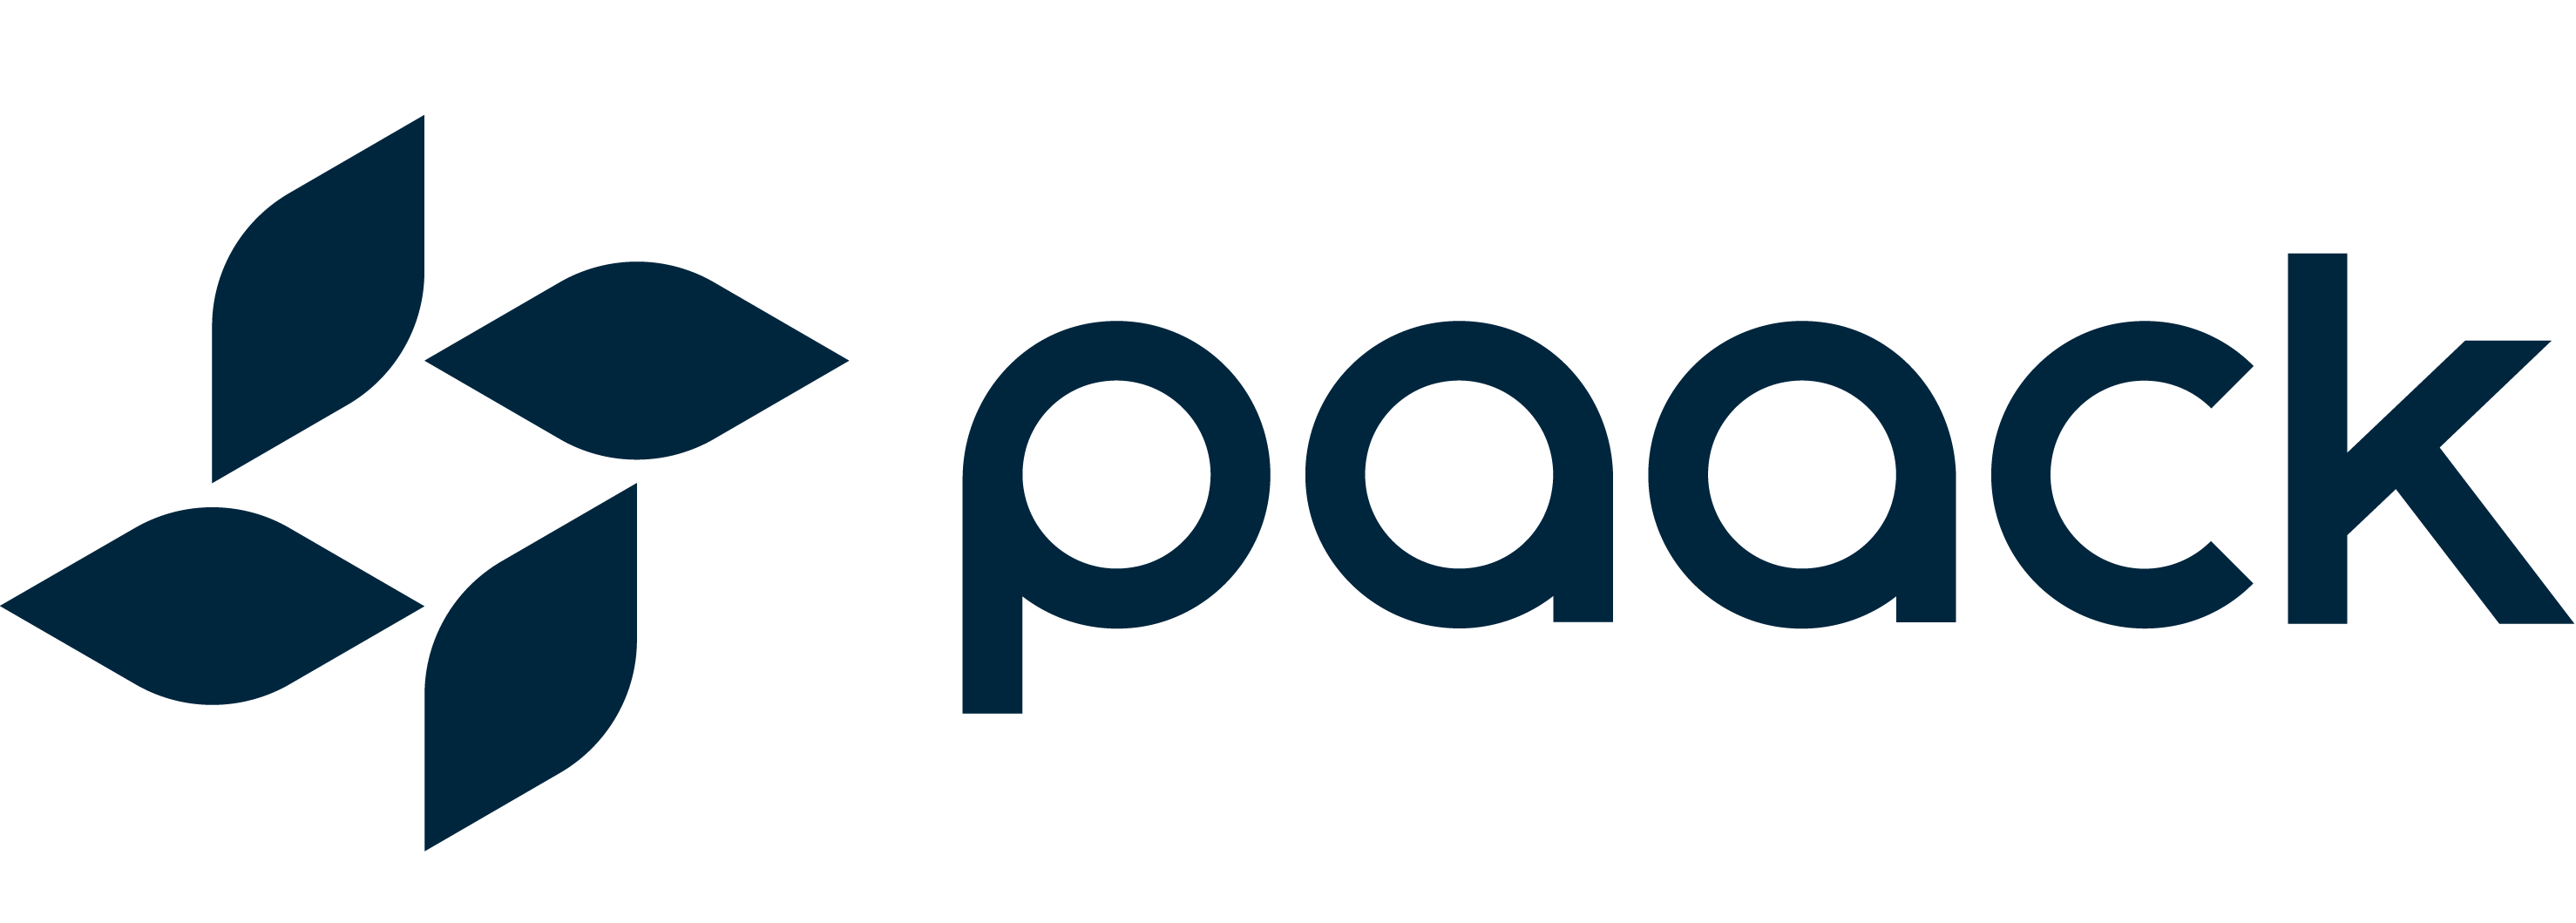 Vision Fund investment portfolio company Paack's logo